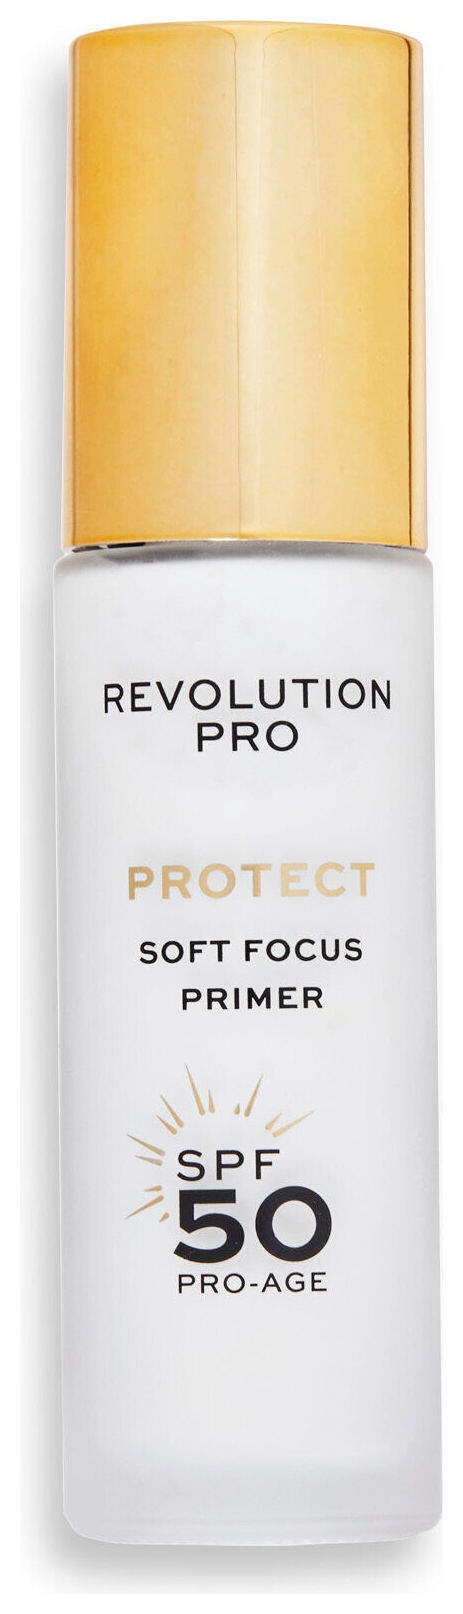 Праймер Protect Soft Focus Primer SPF 50